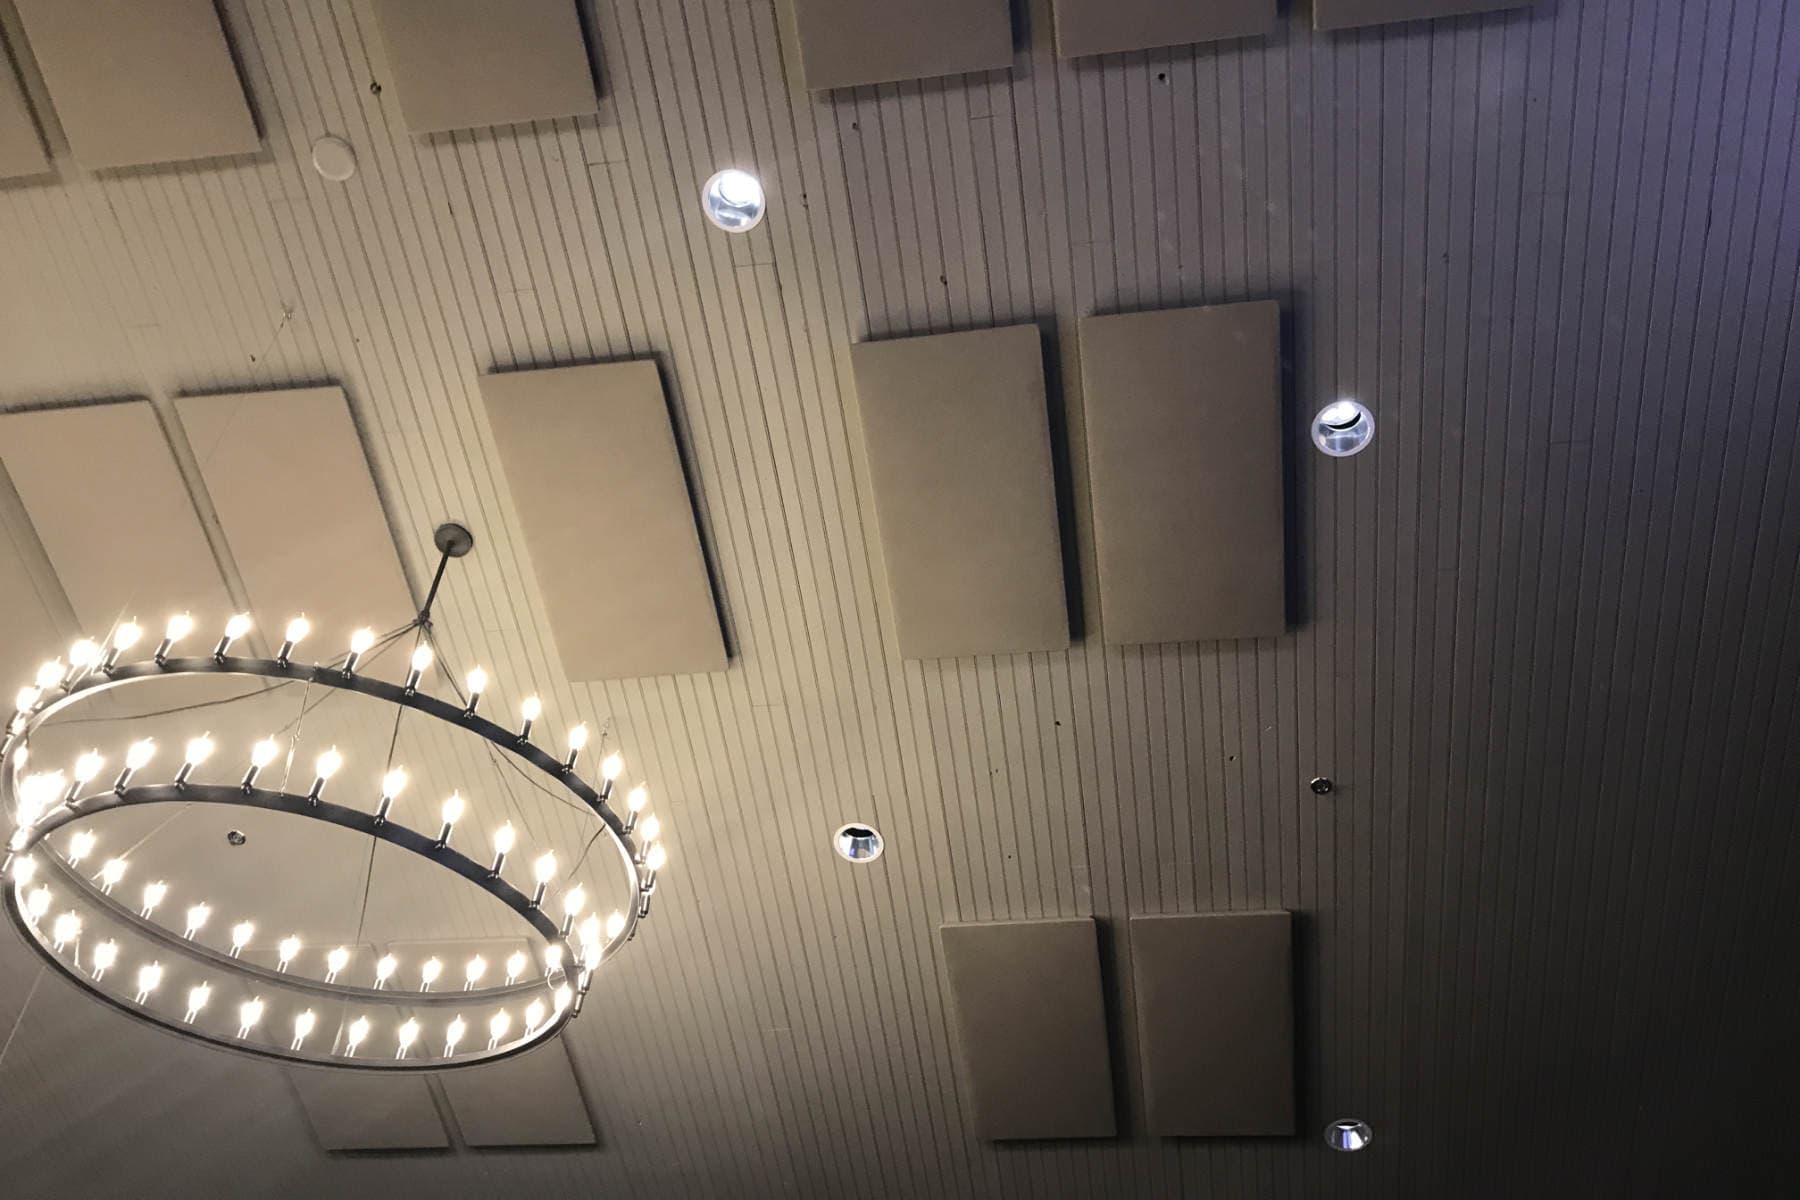 WAVEPro acoustic panels on ceiling of restaurant